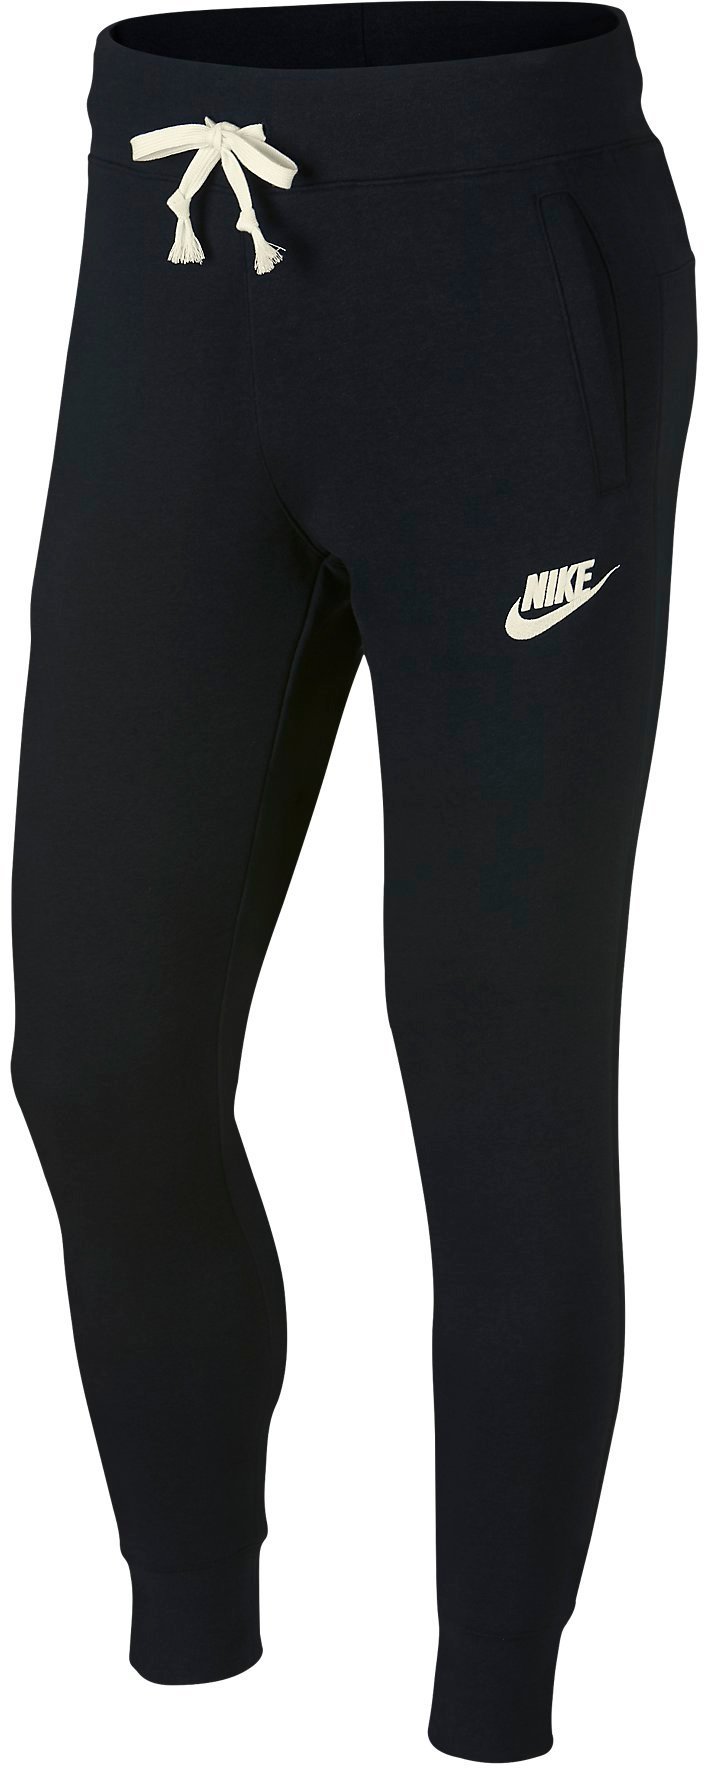 Pants Nike M NSW HERITAGE JGGR 